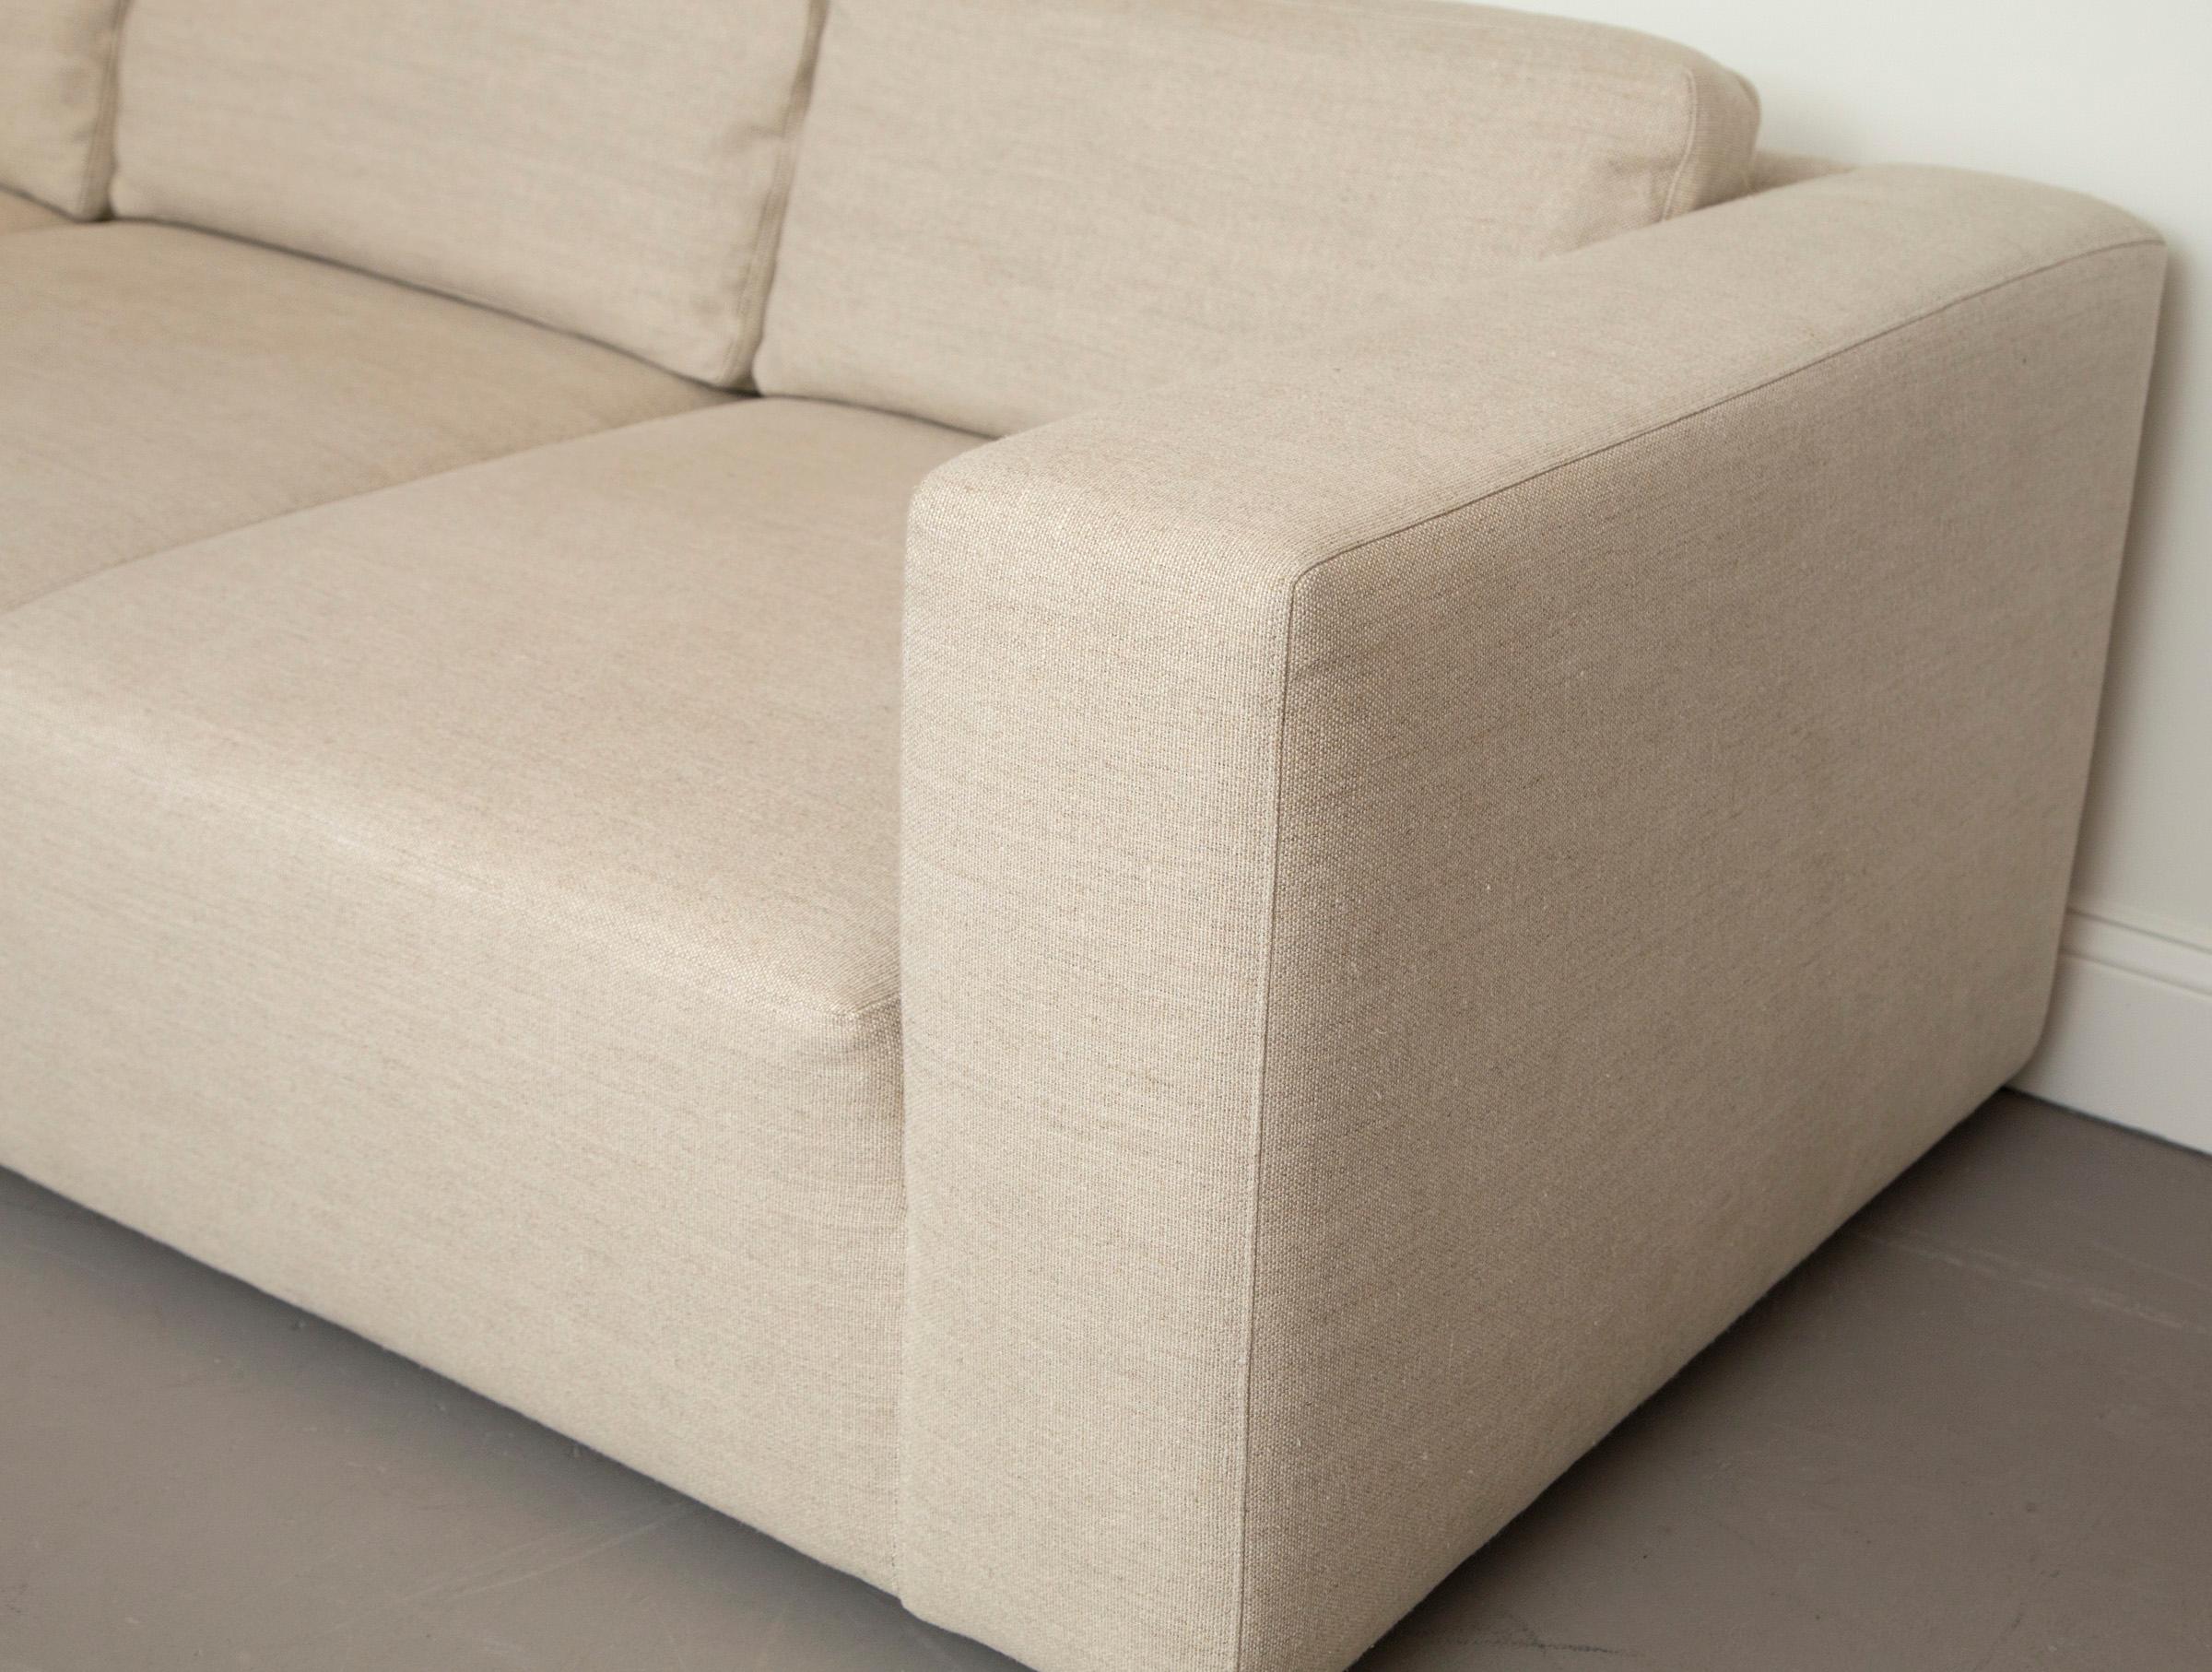 American Mid-Century Modern Sofa Redone in Flax Belgian Linen